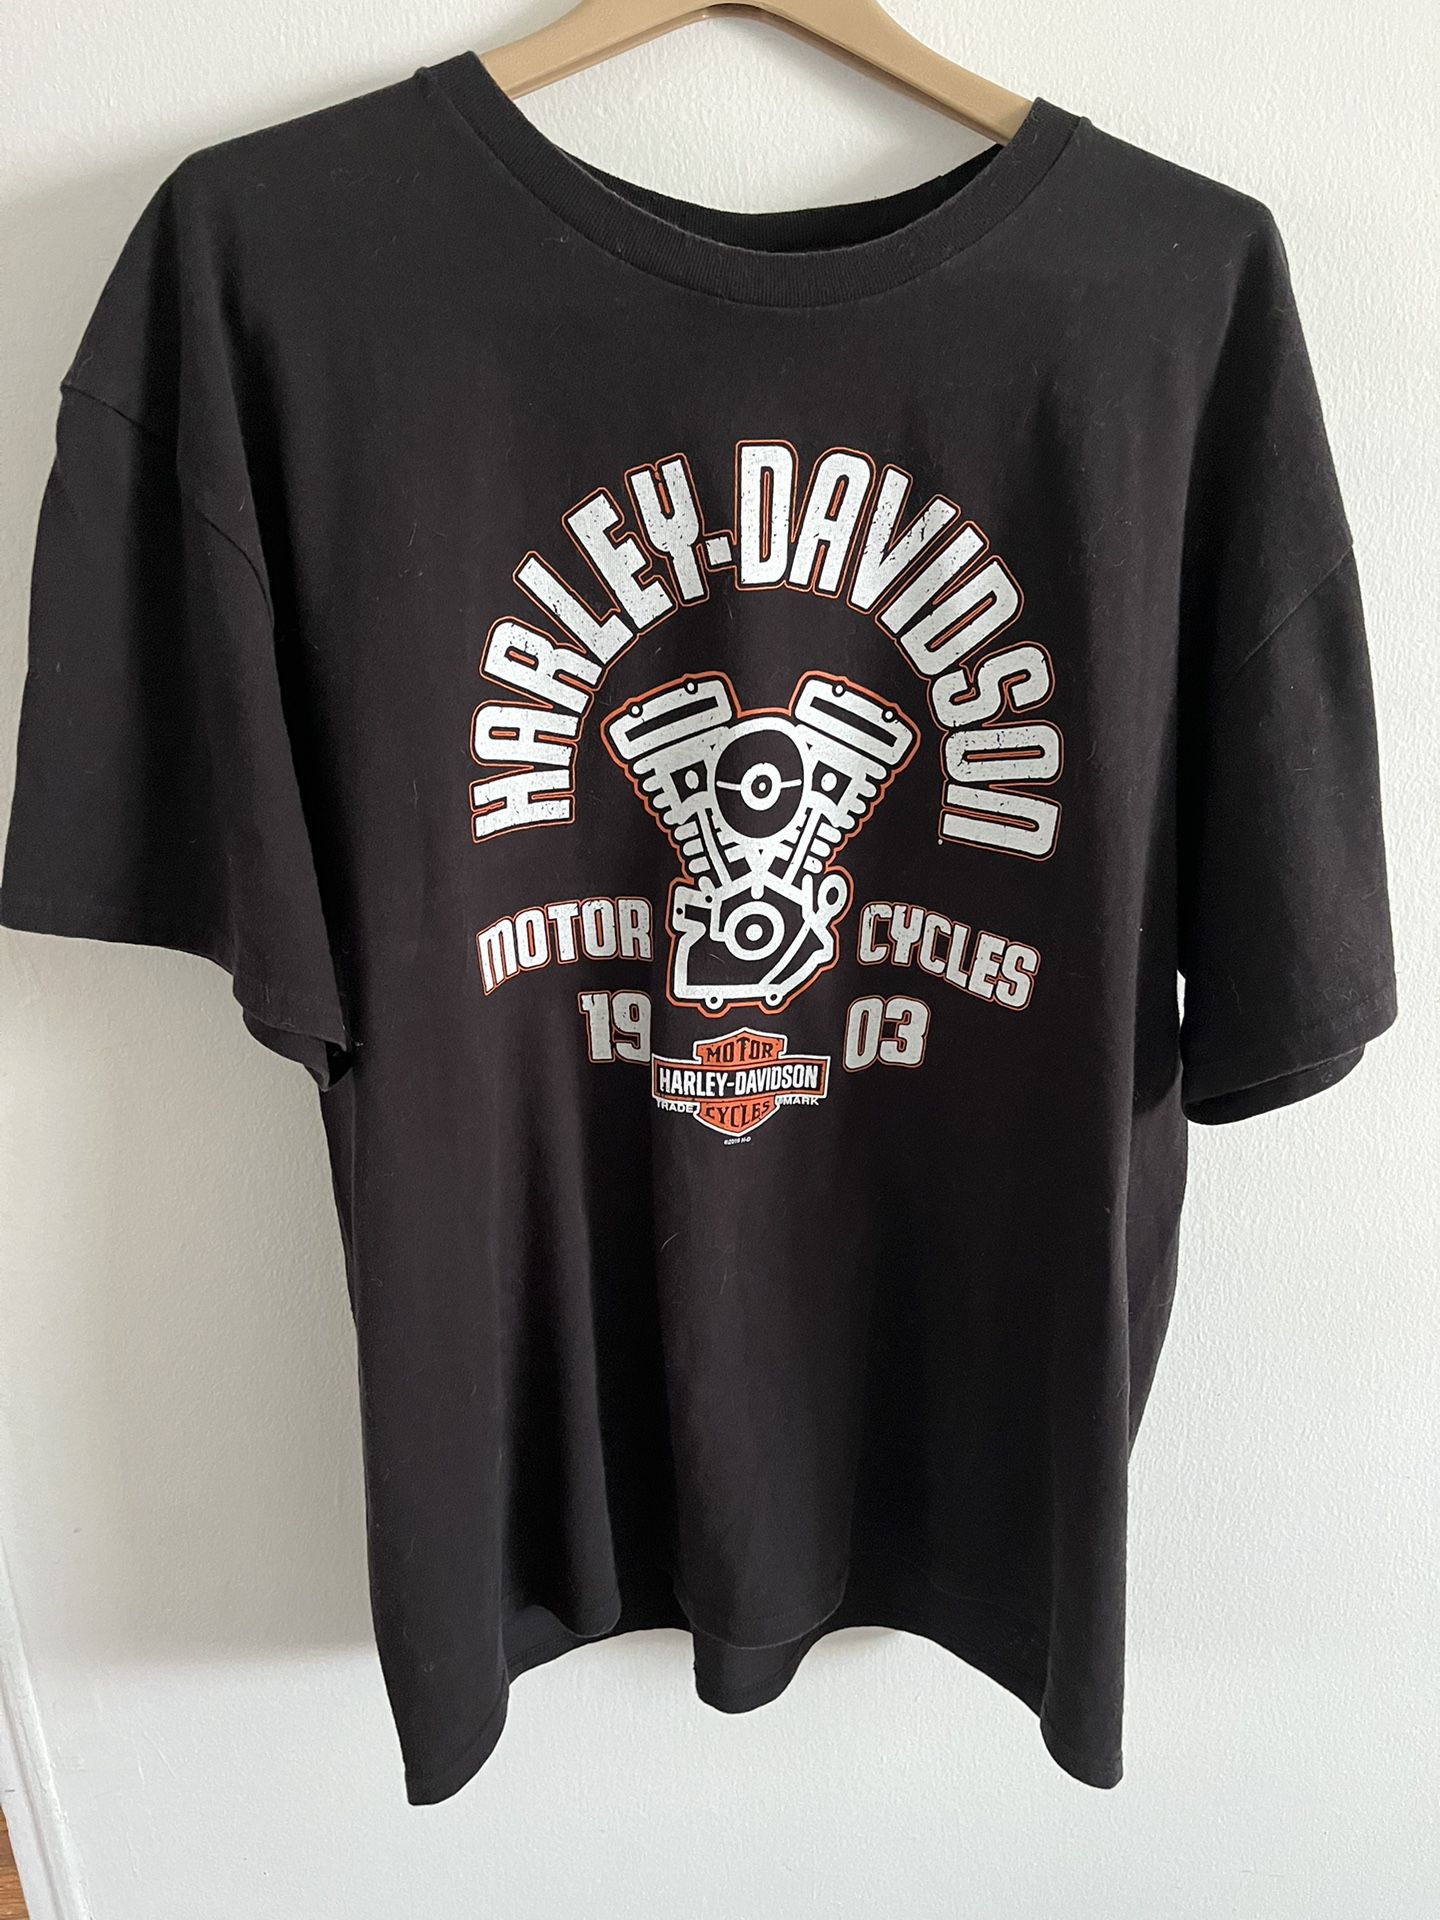 Harley Davidson Tshirt and ZIPPO